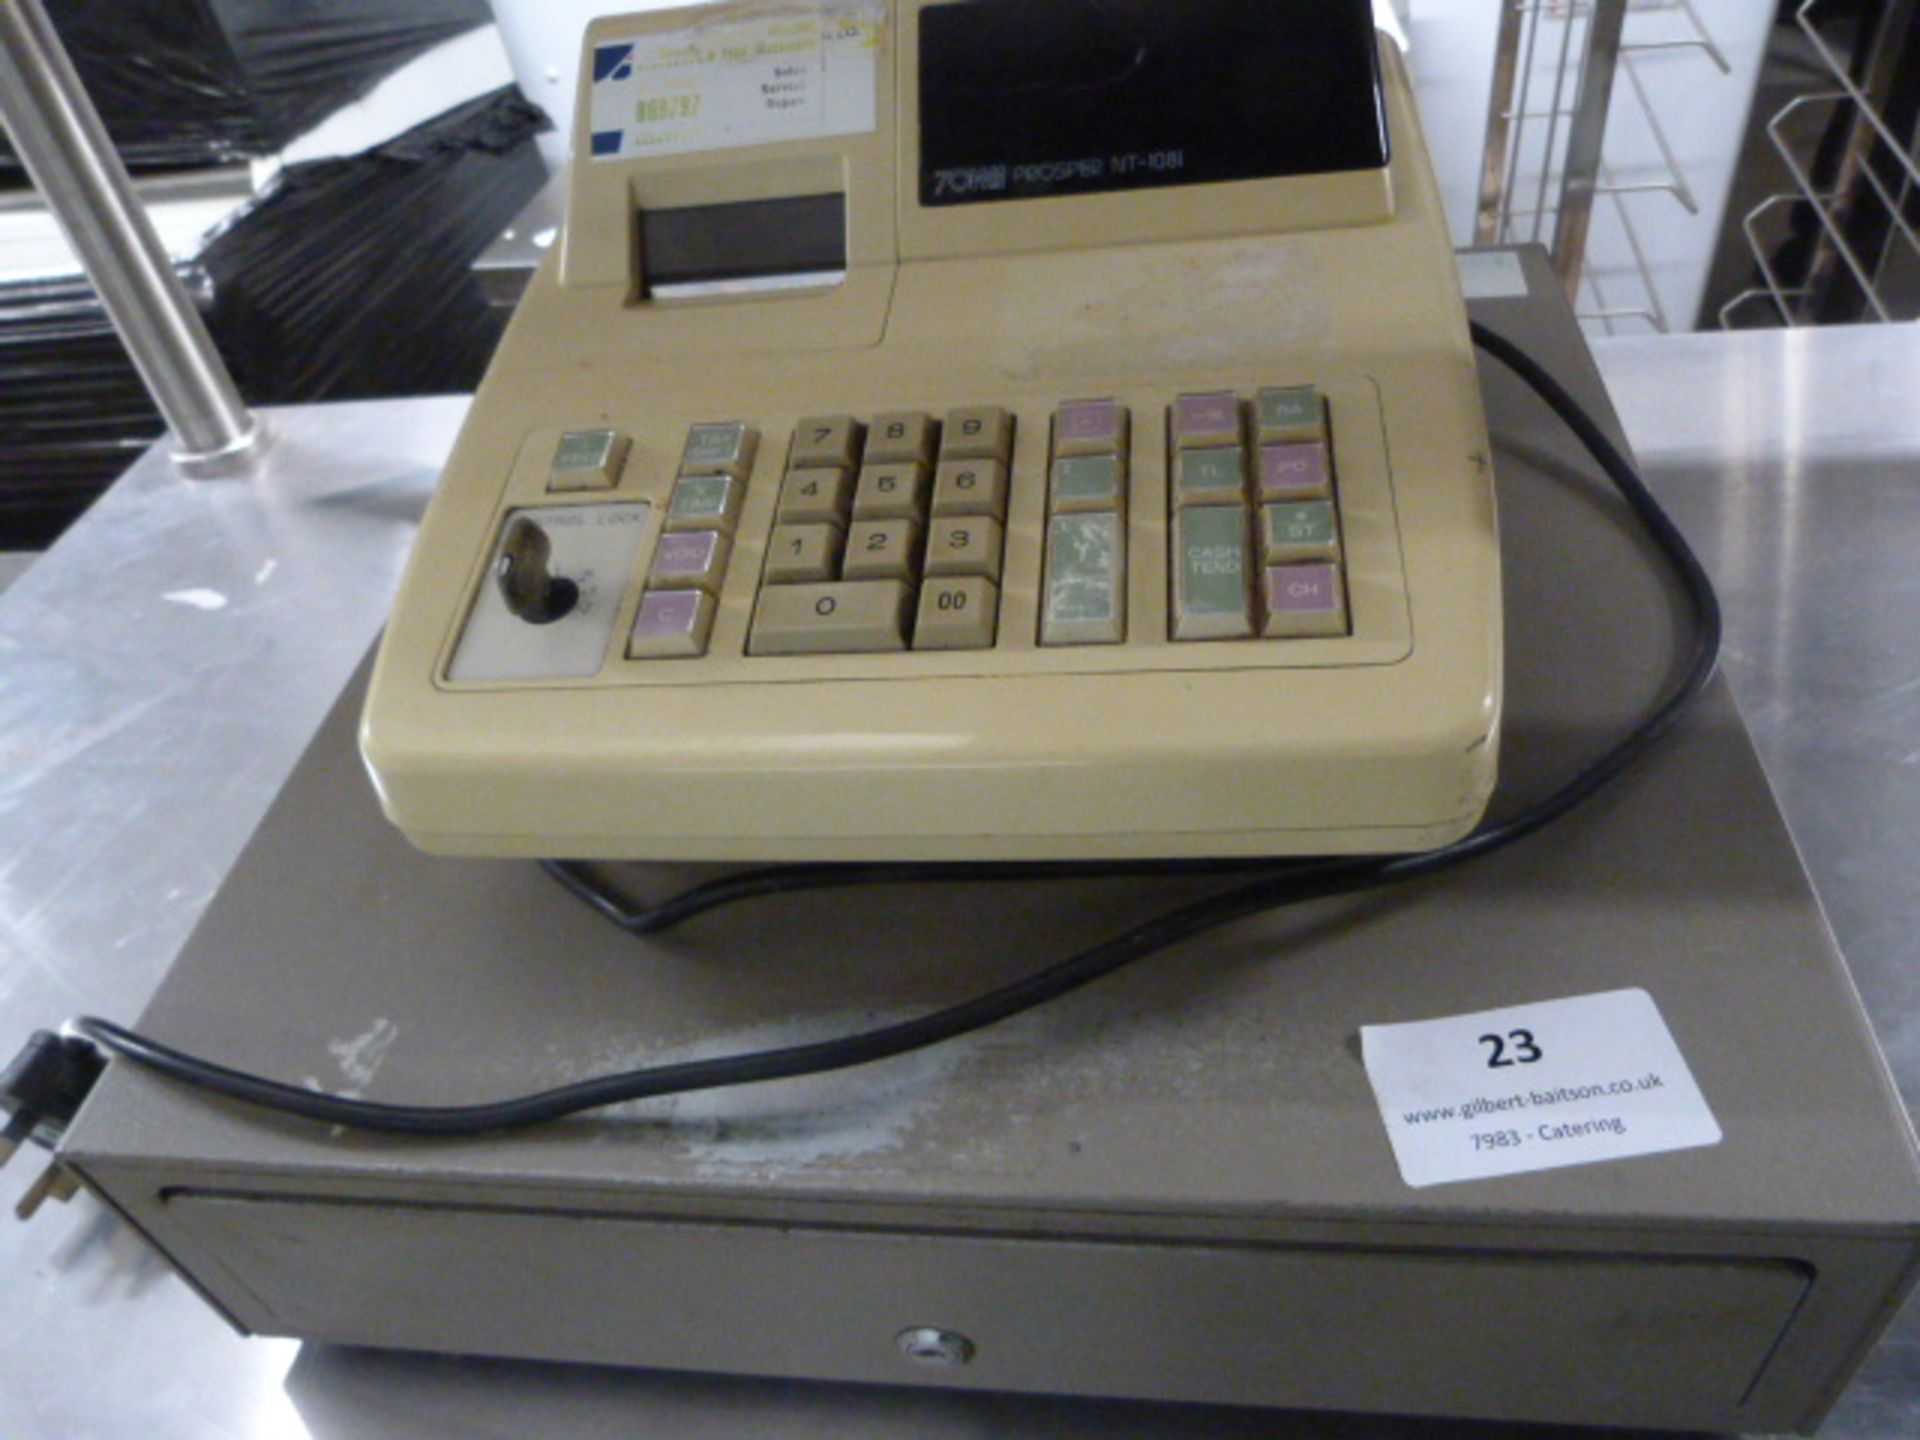 Towa Prosper NT-0181 Electronic Cash Register